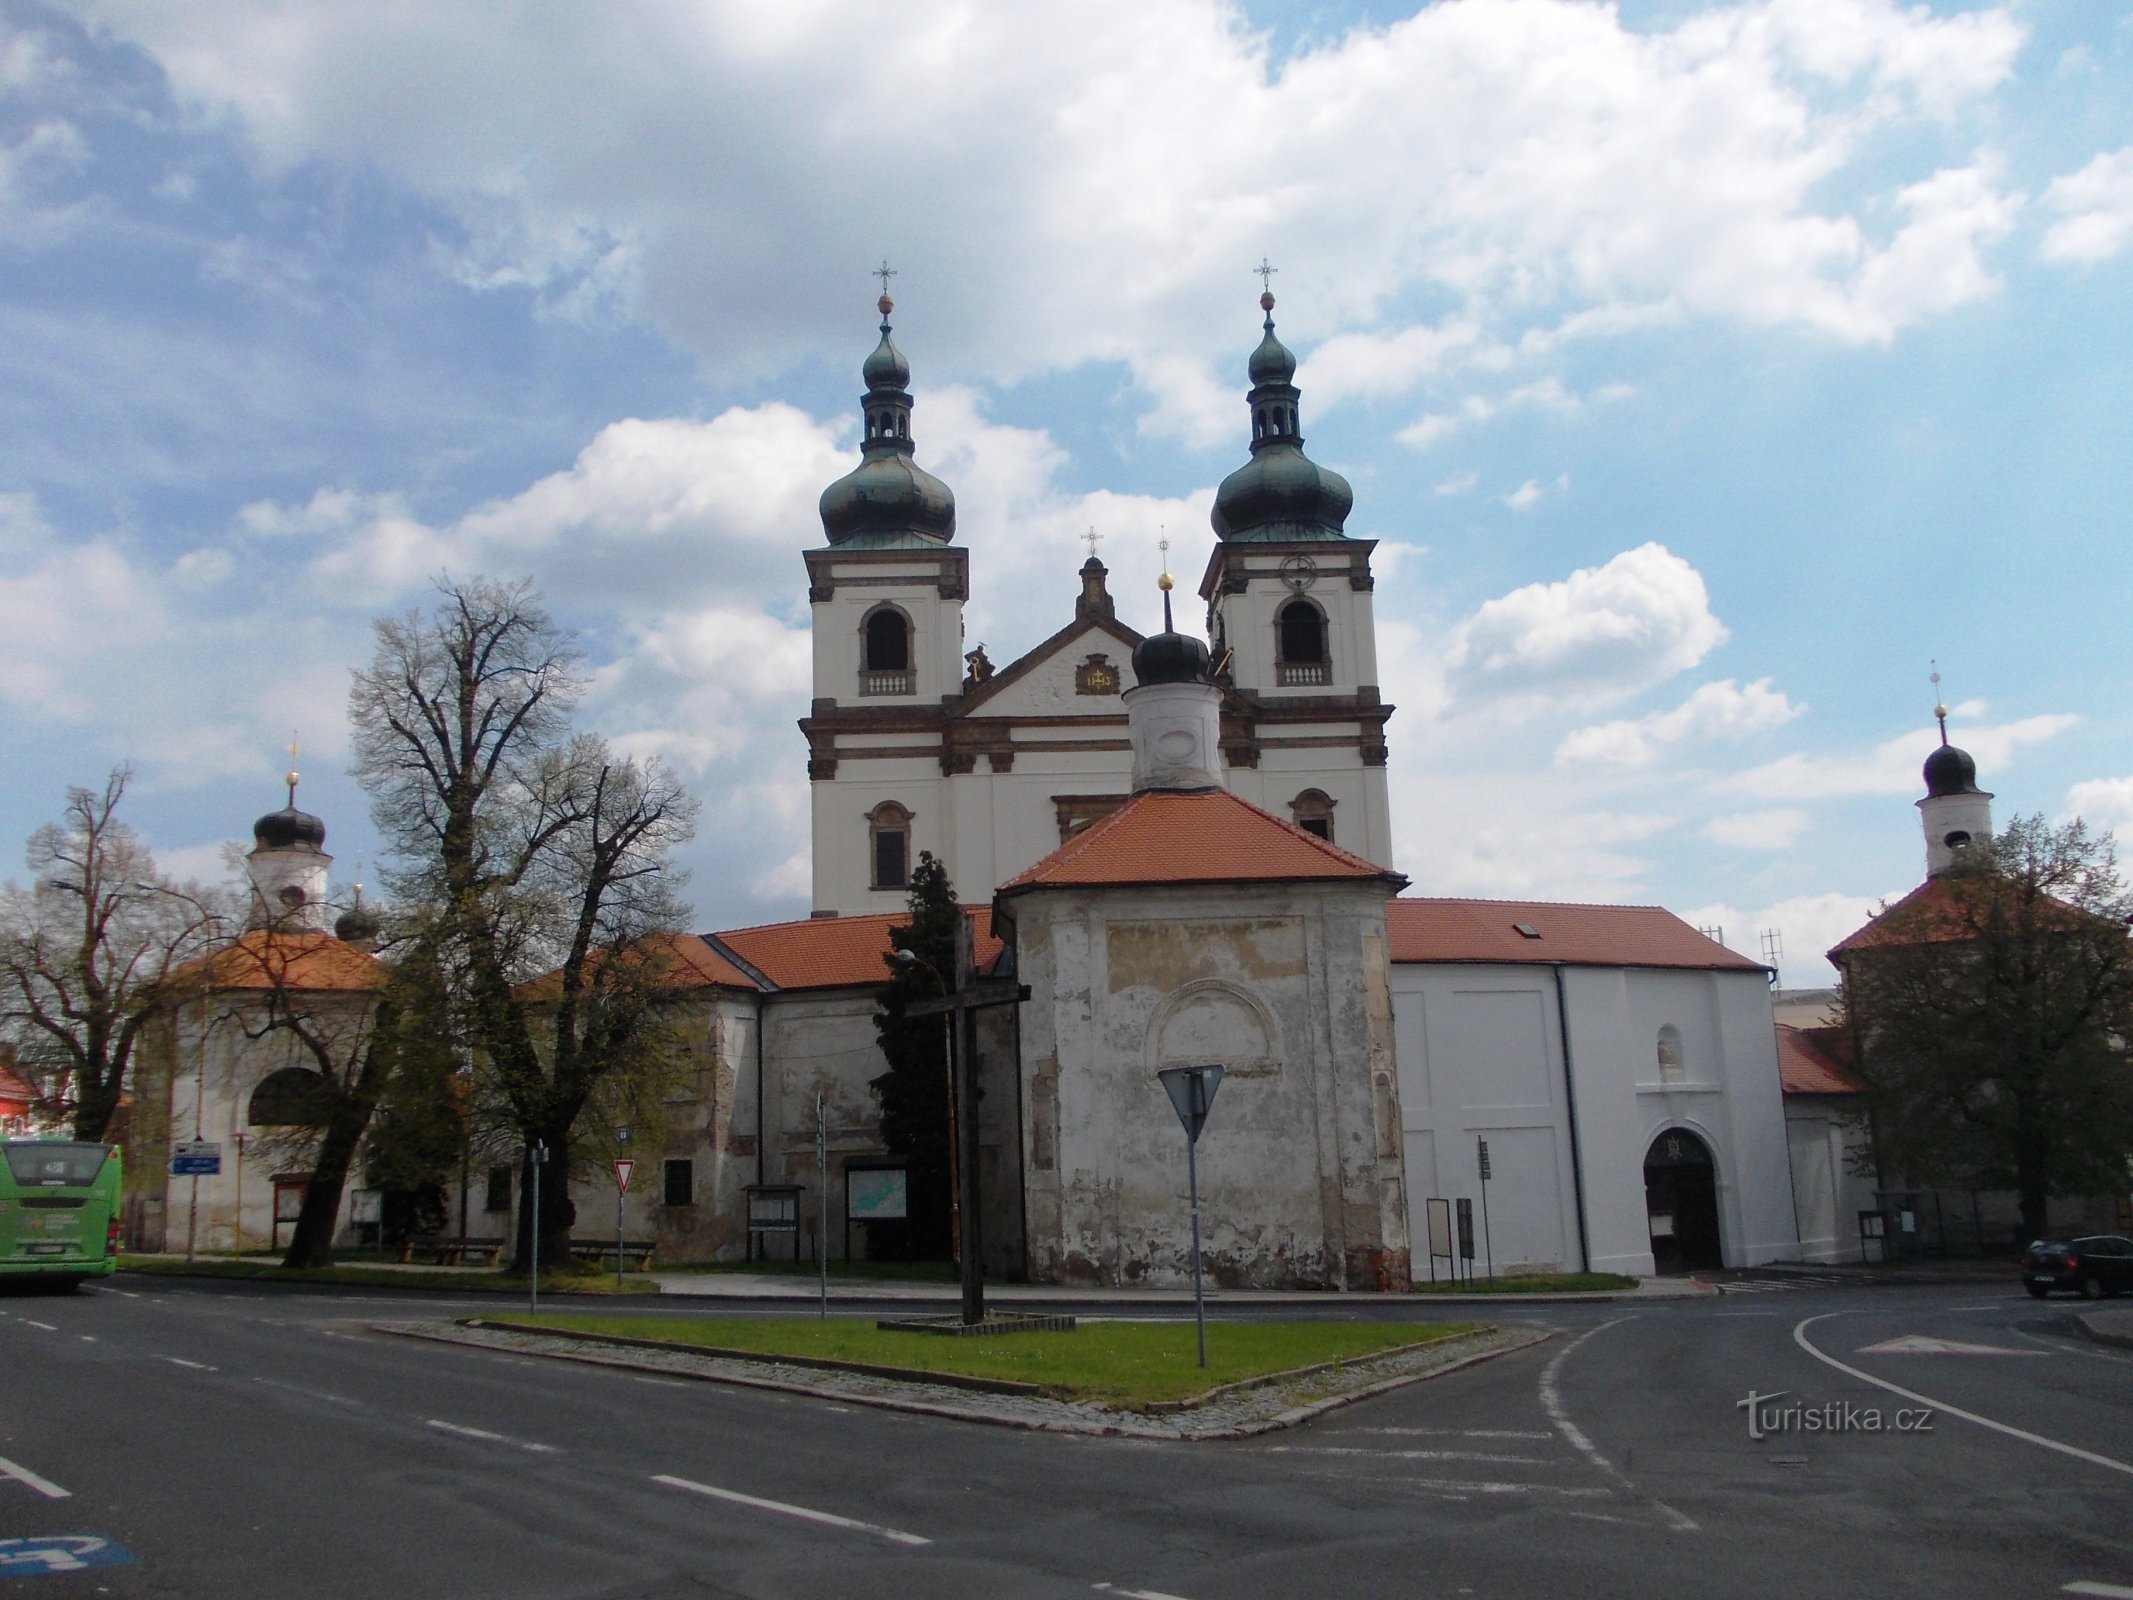 Basilica from Mariánské náměstí